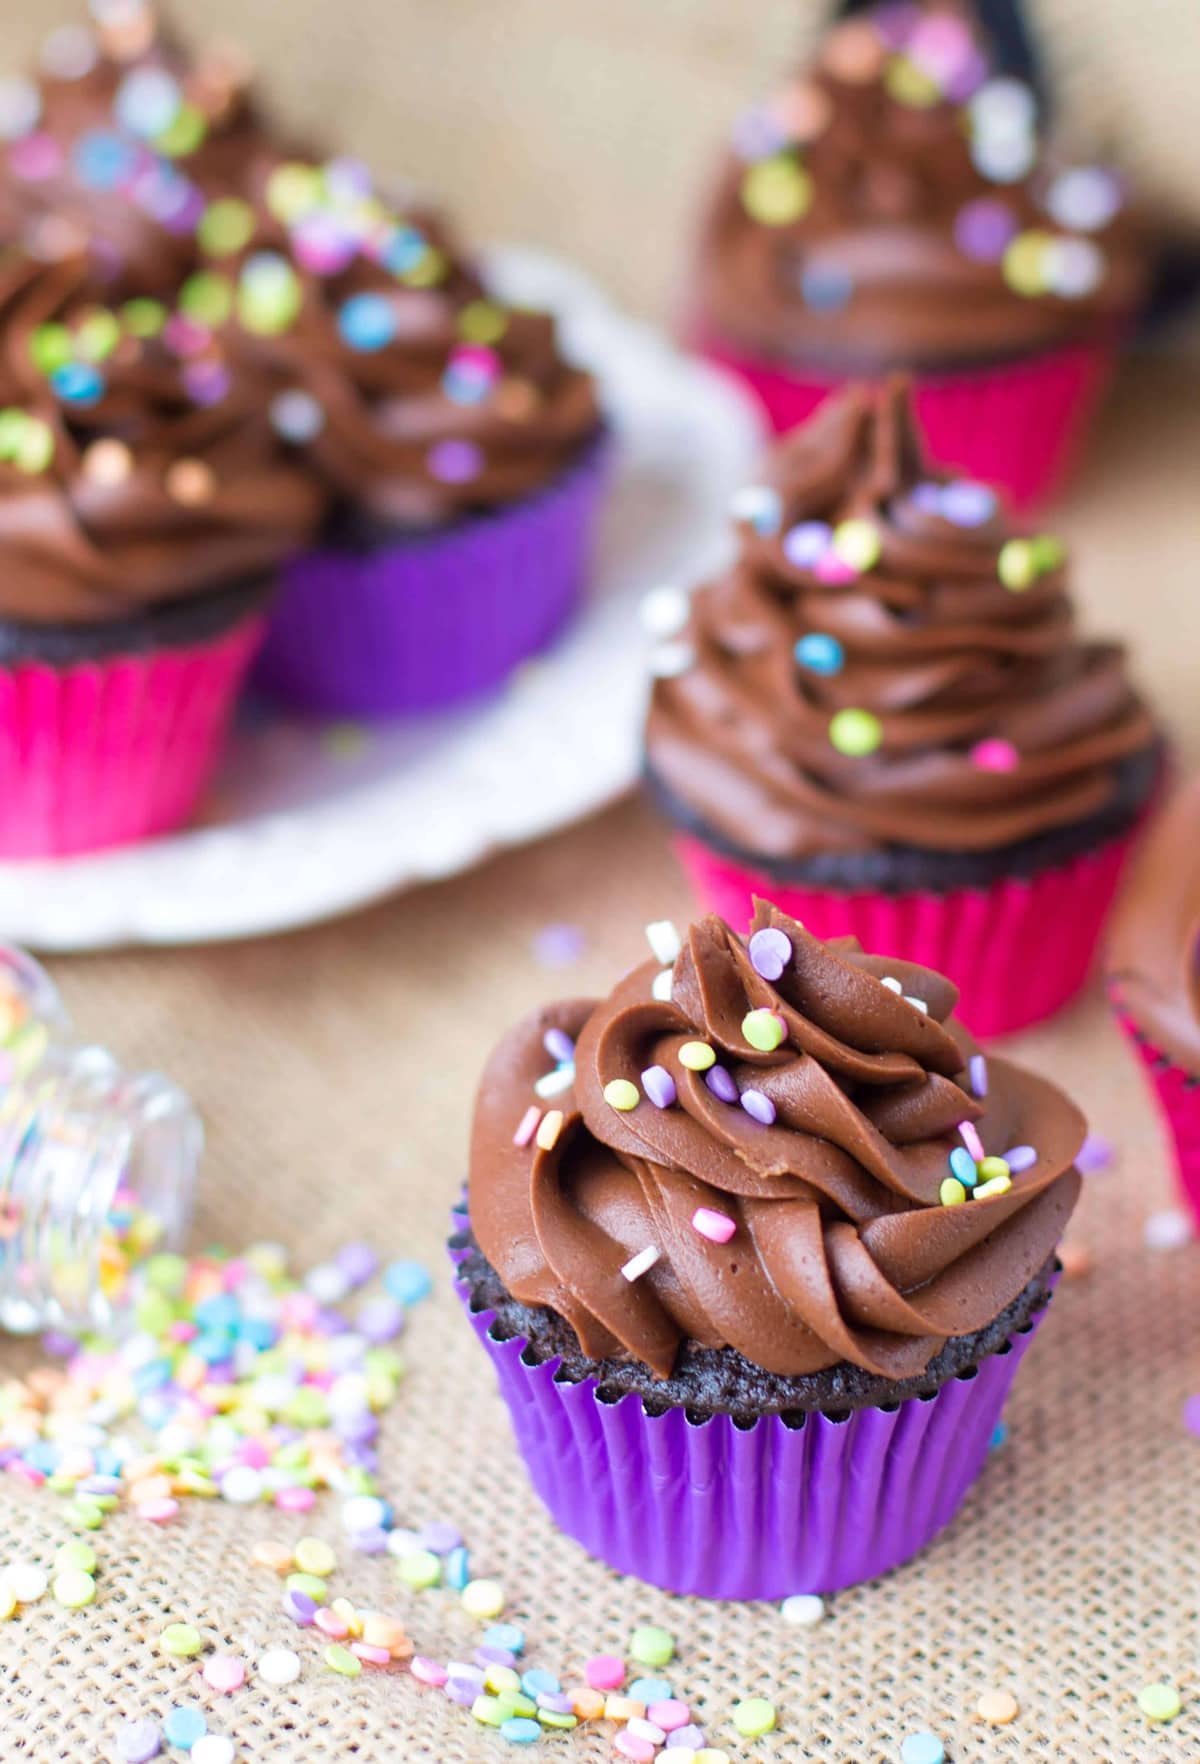 Tasty Halloween Cupcakes with Chocolate